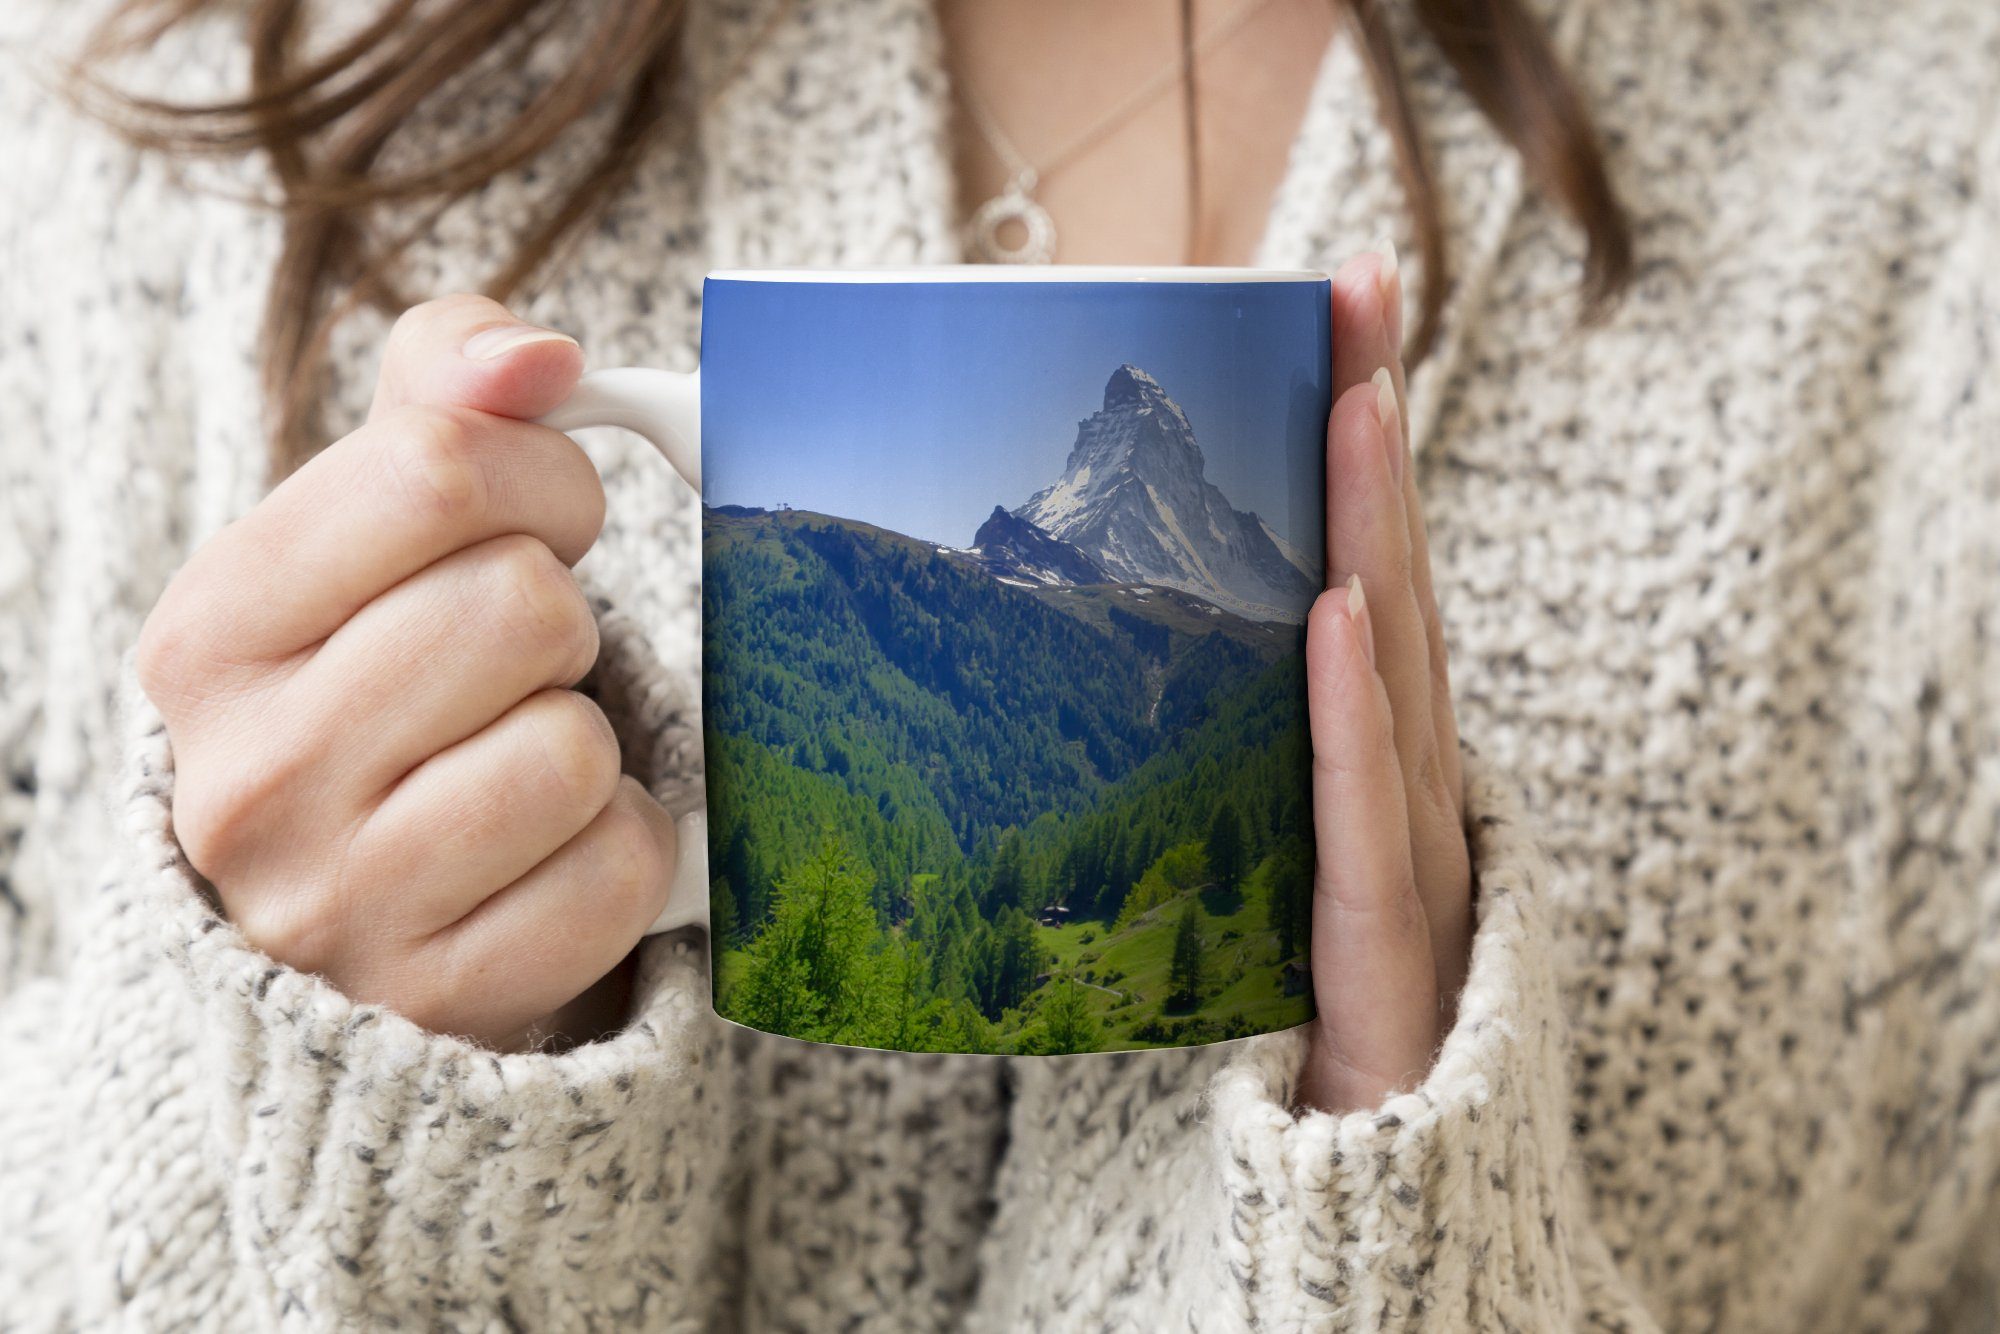 MuchoWow Tasse Schweizer Alpen im grünen Keramik, Teetasse, Becher, Geschenk Kaffeetassen, Teetasse, Bäumen, mit Matterhorn